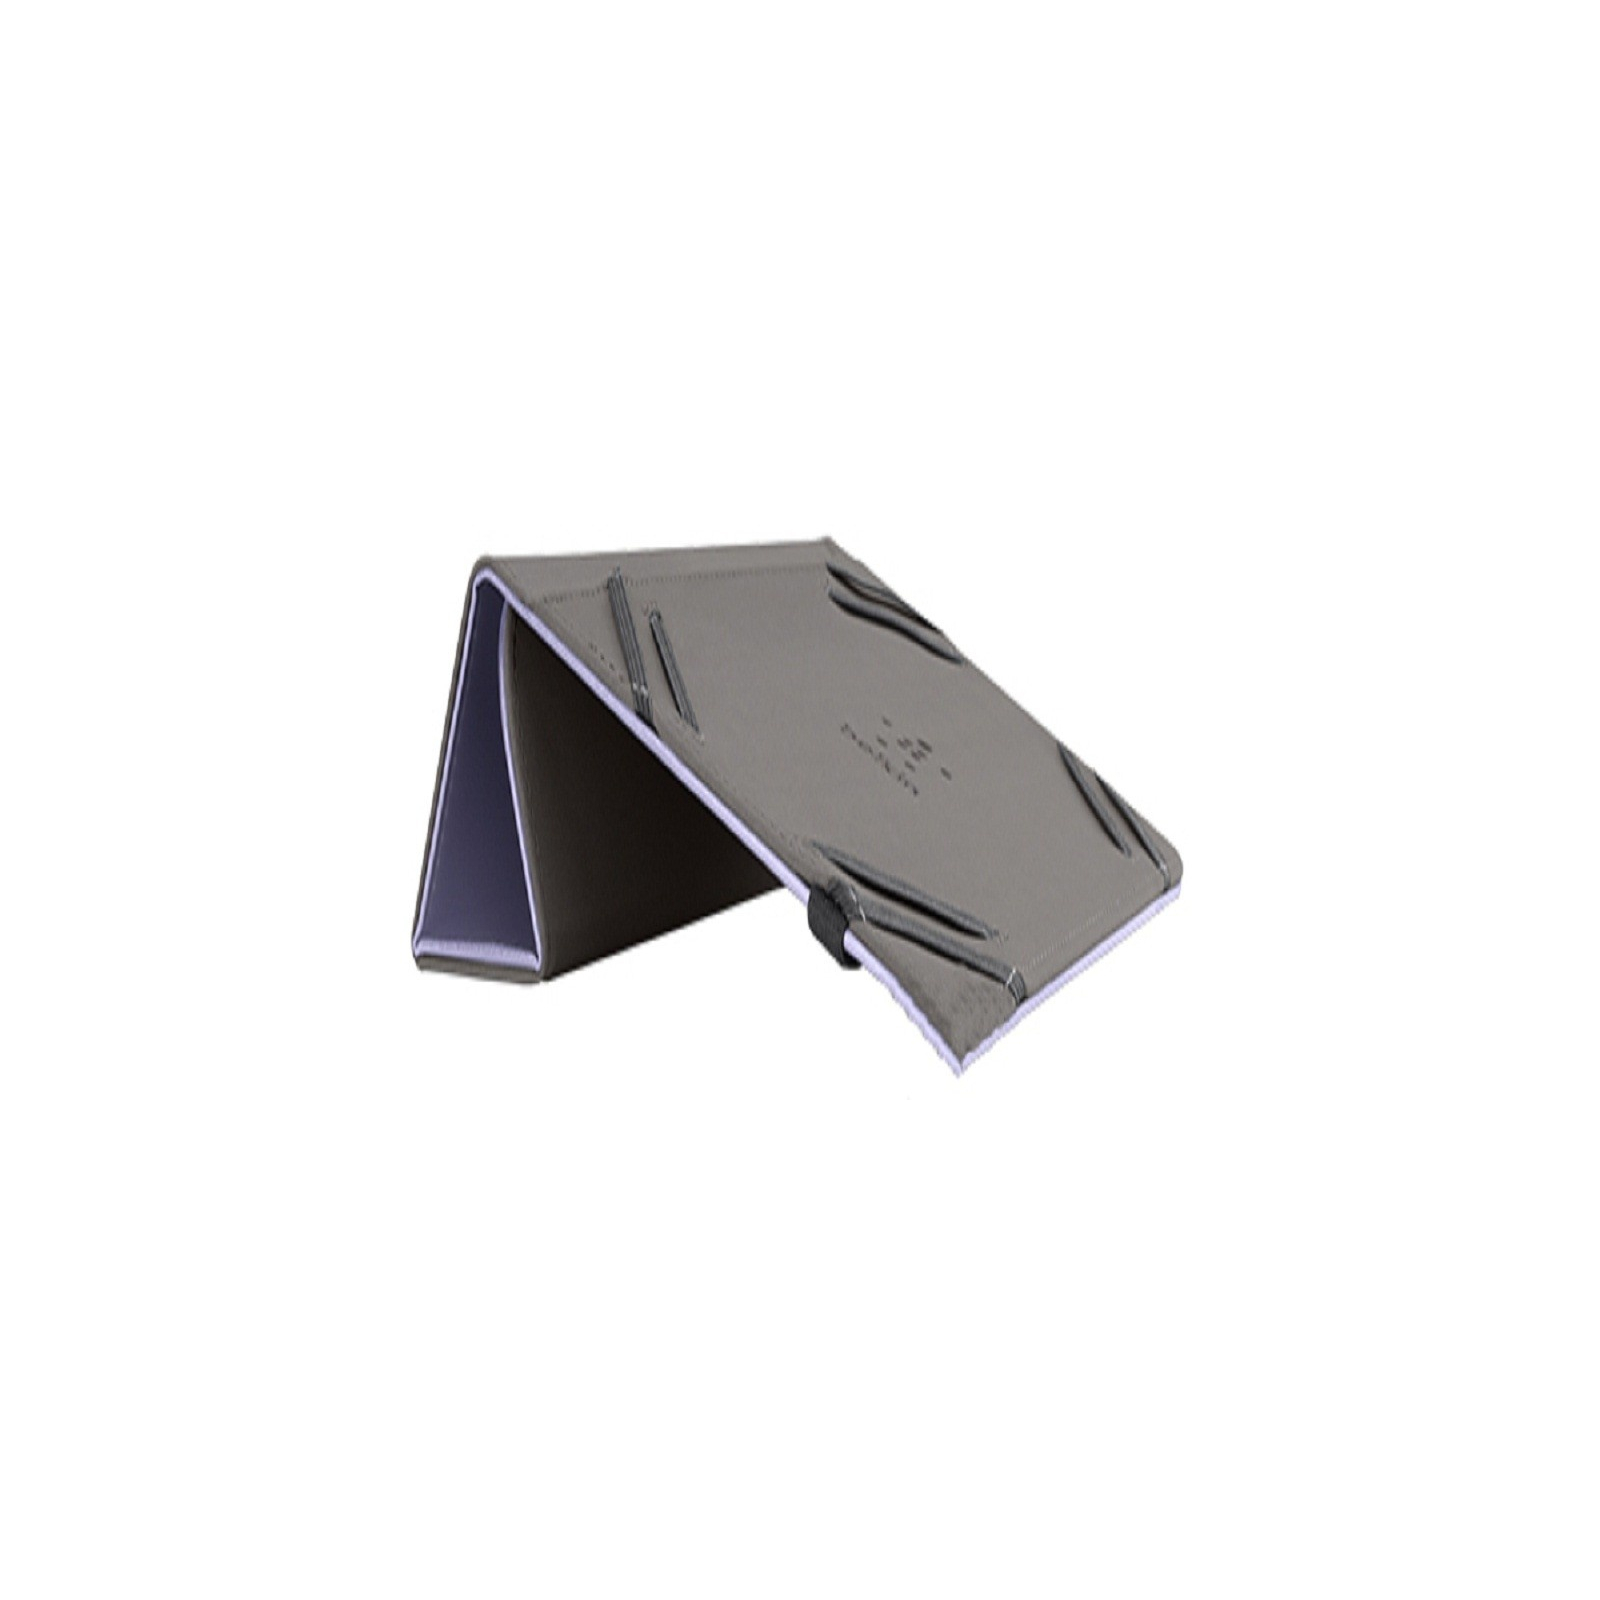 Чехол для планшета Belkin 7 Universal Tri-Fold Folio Stand (F7P202B2C01) изображение 4